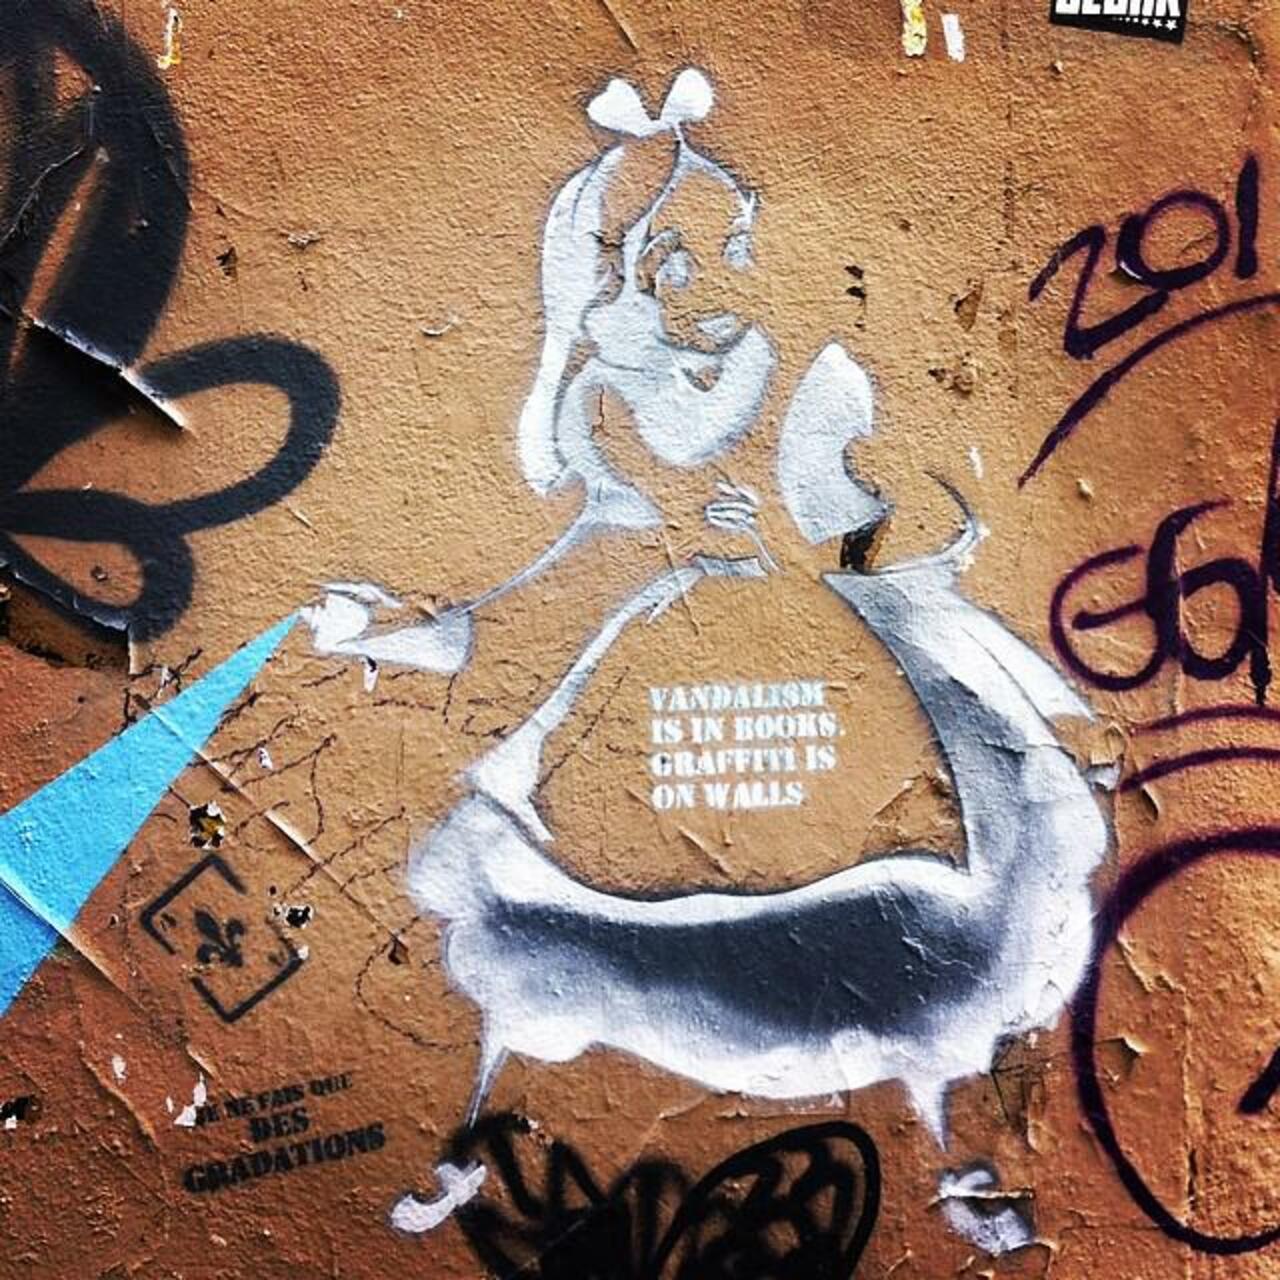 #Paris #graffiti photo by @benstagramin http://ift.tt/1O0uz3w #StreetArt http://t.co/PiUe6JvPQl